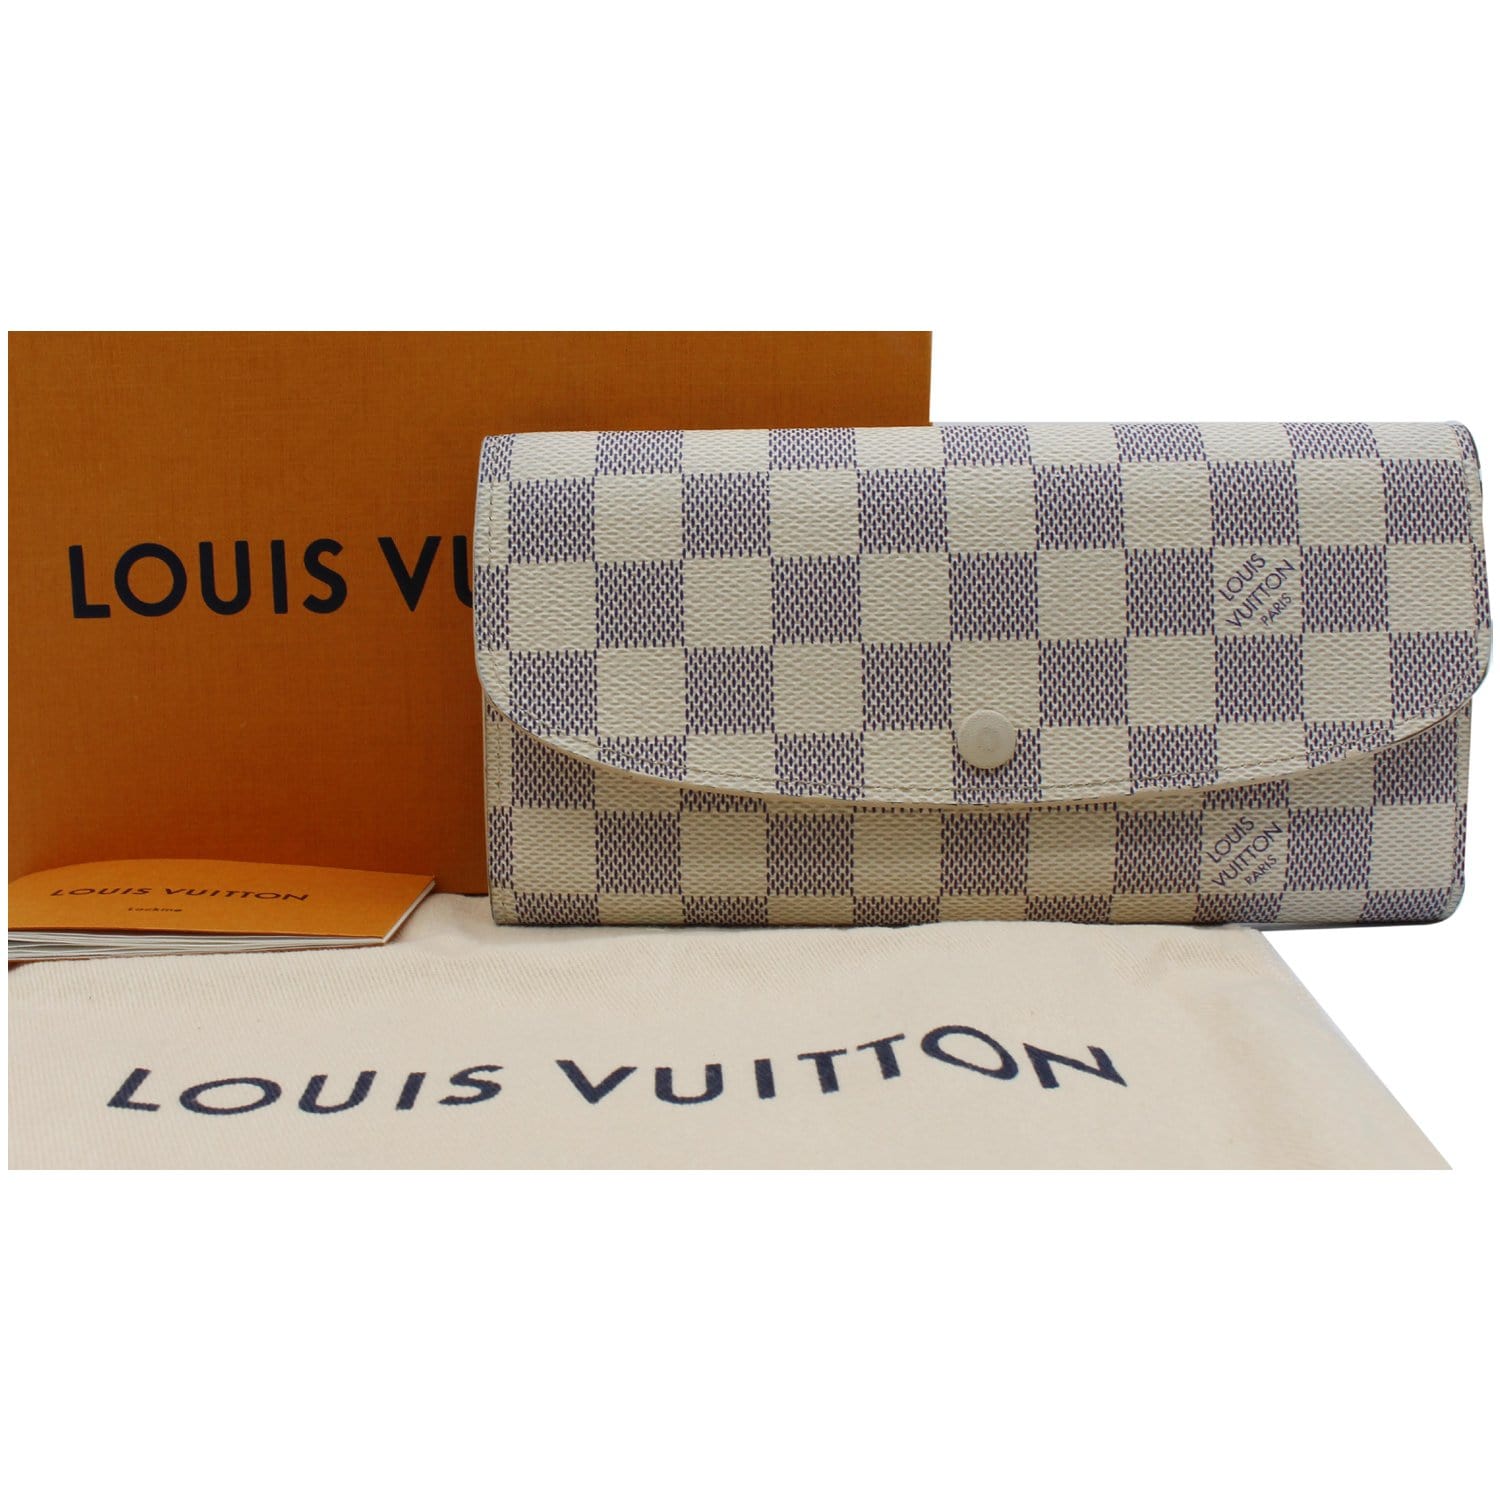 Products by Louis Vuitton: Emilie Wallet  Louis vuitton emilie wallet,  Wallet, Emilie wallet